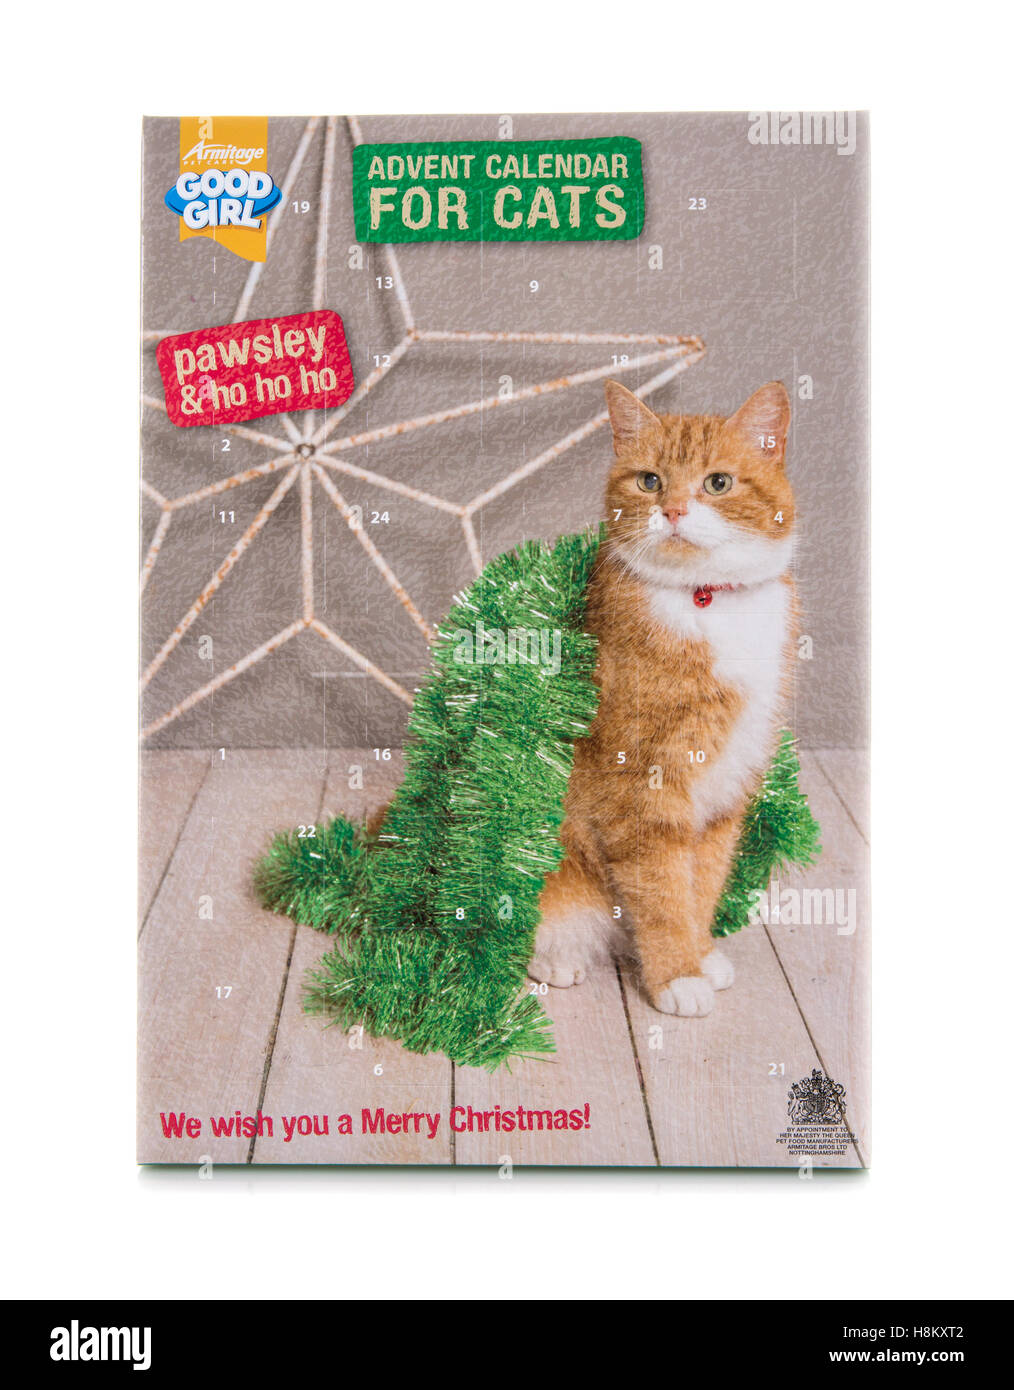 Good Girl Advent Calendar for Cats Stock Photo